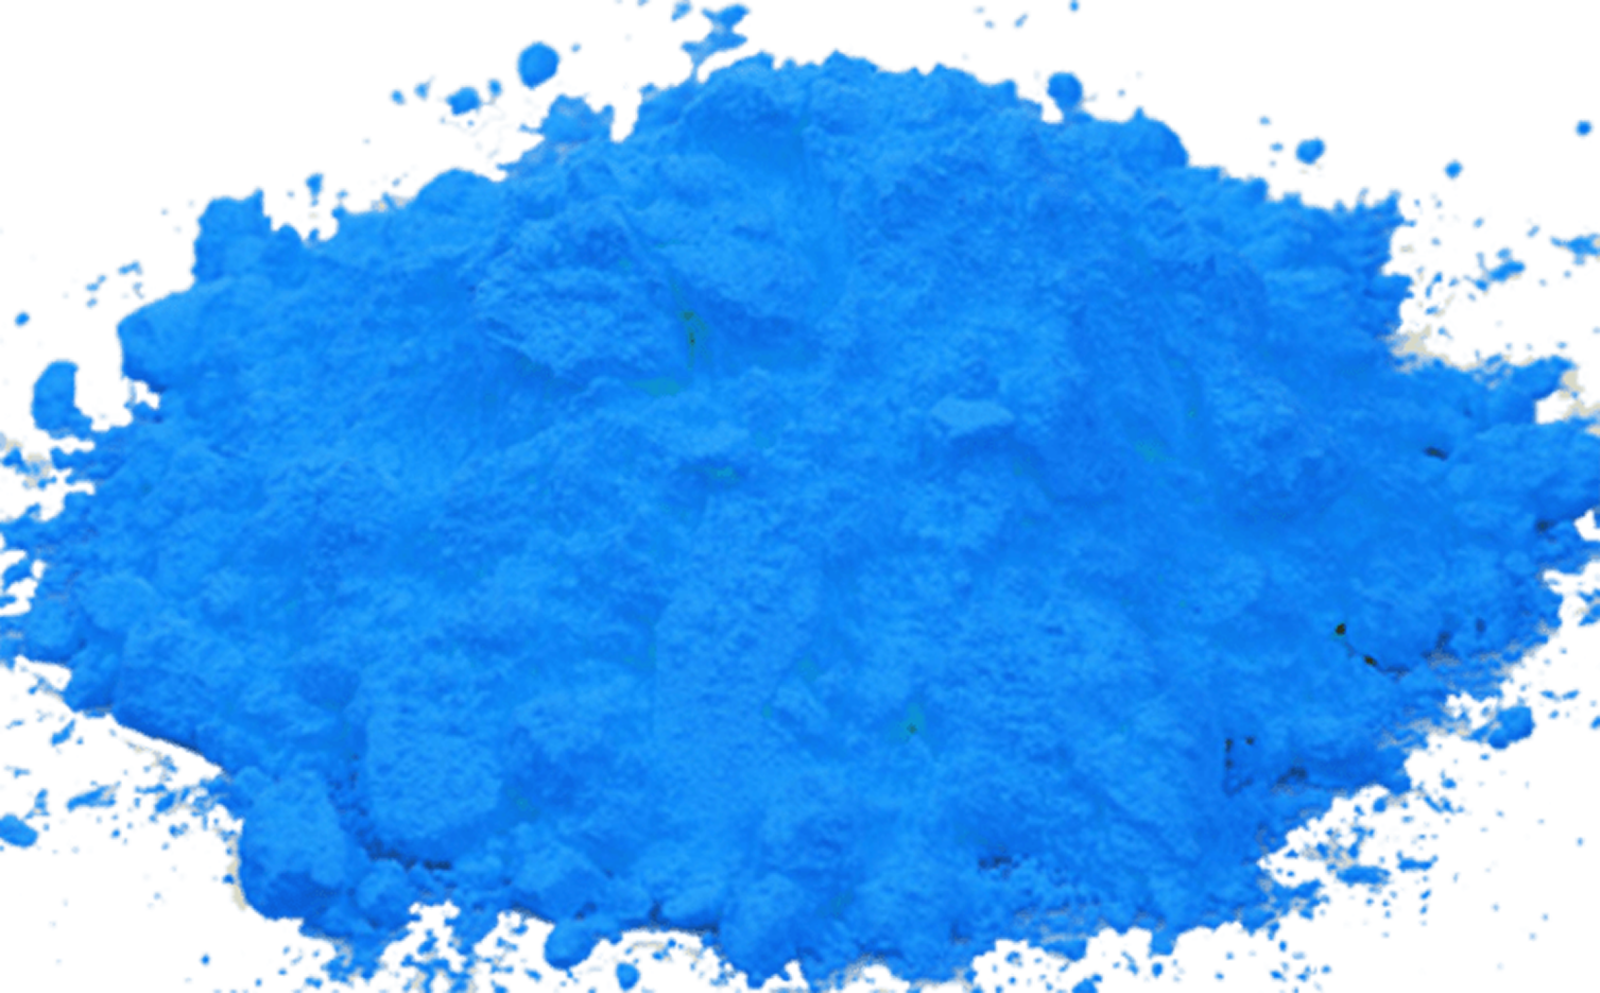 Buy 5 Get 1 Free 1lb Light Blue Holi Color Colour Powder Gender Reveal